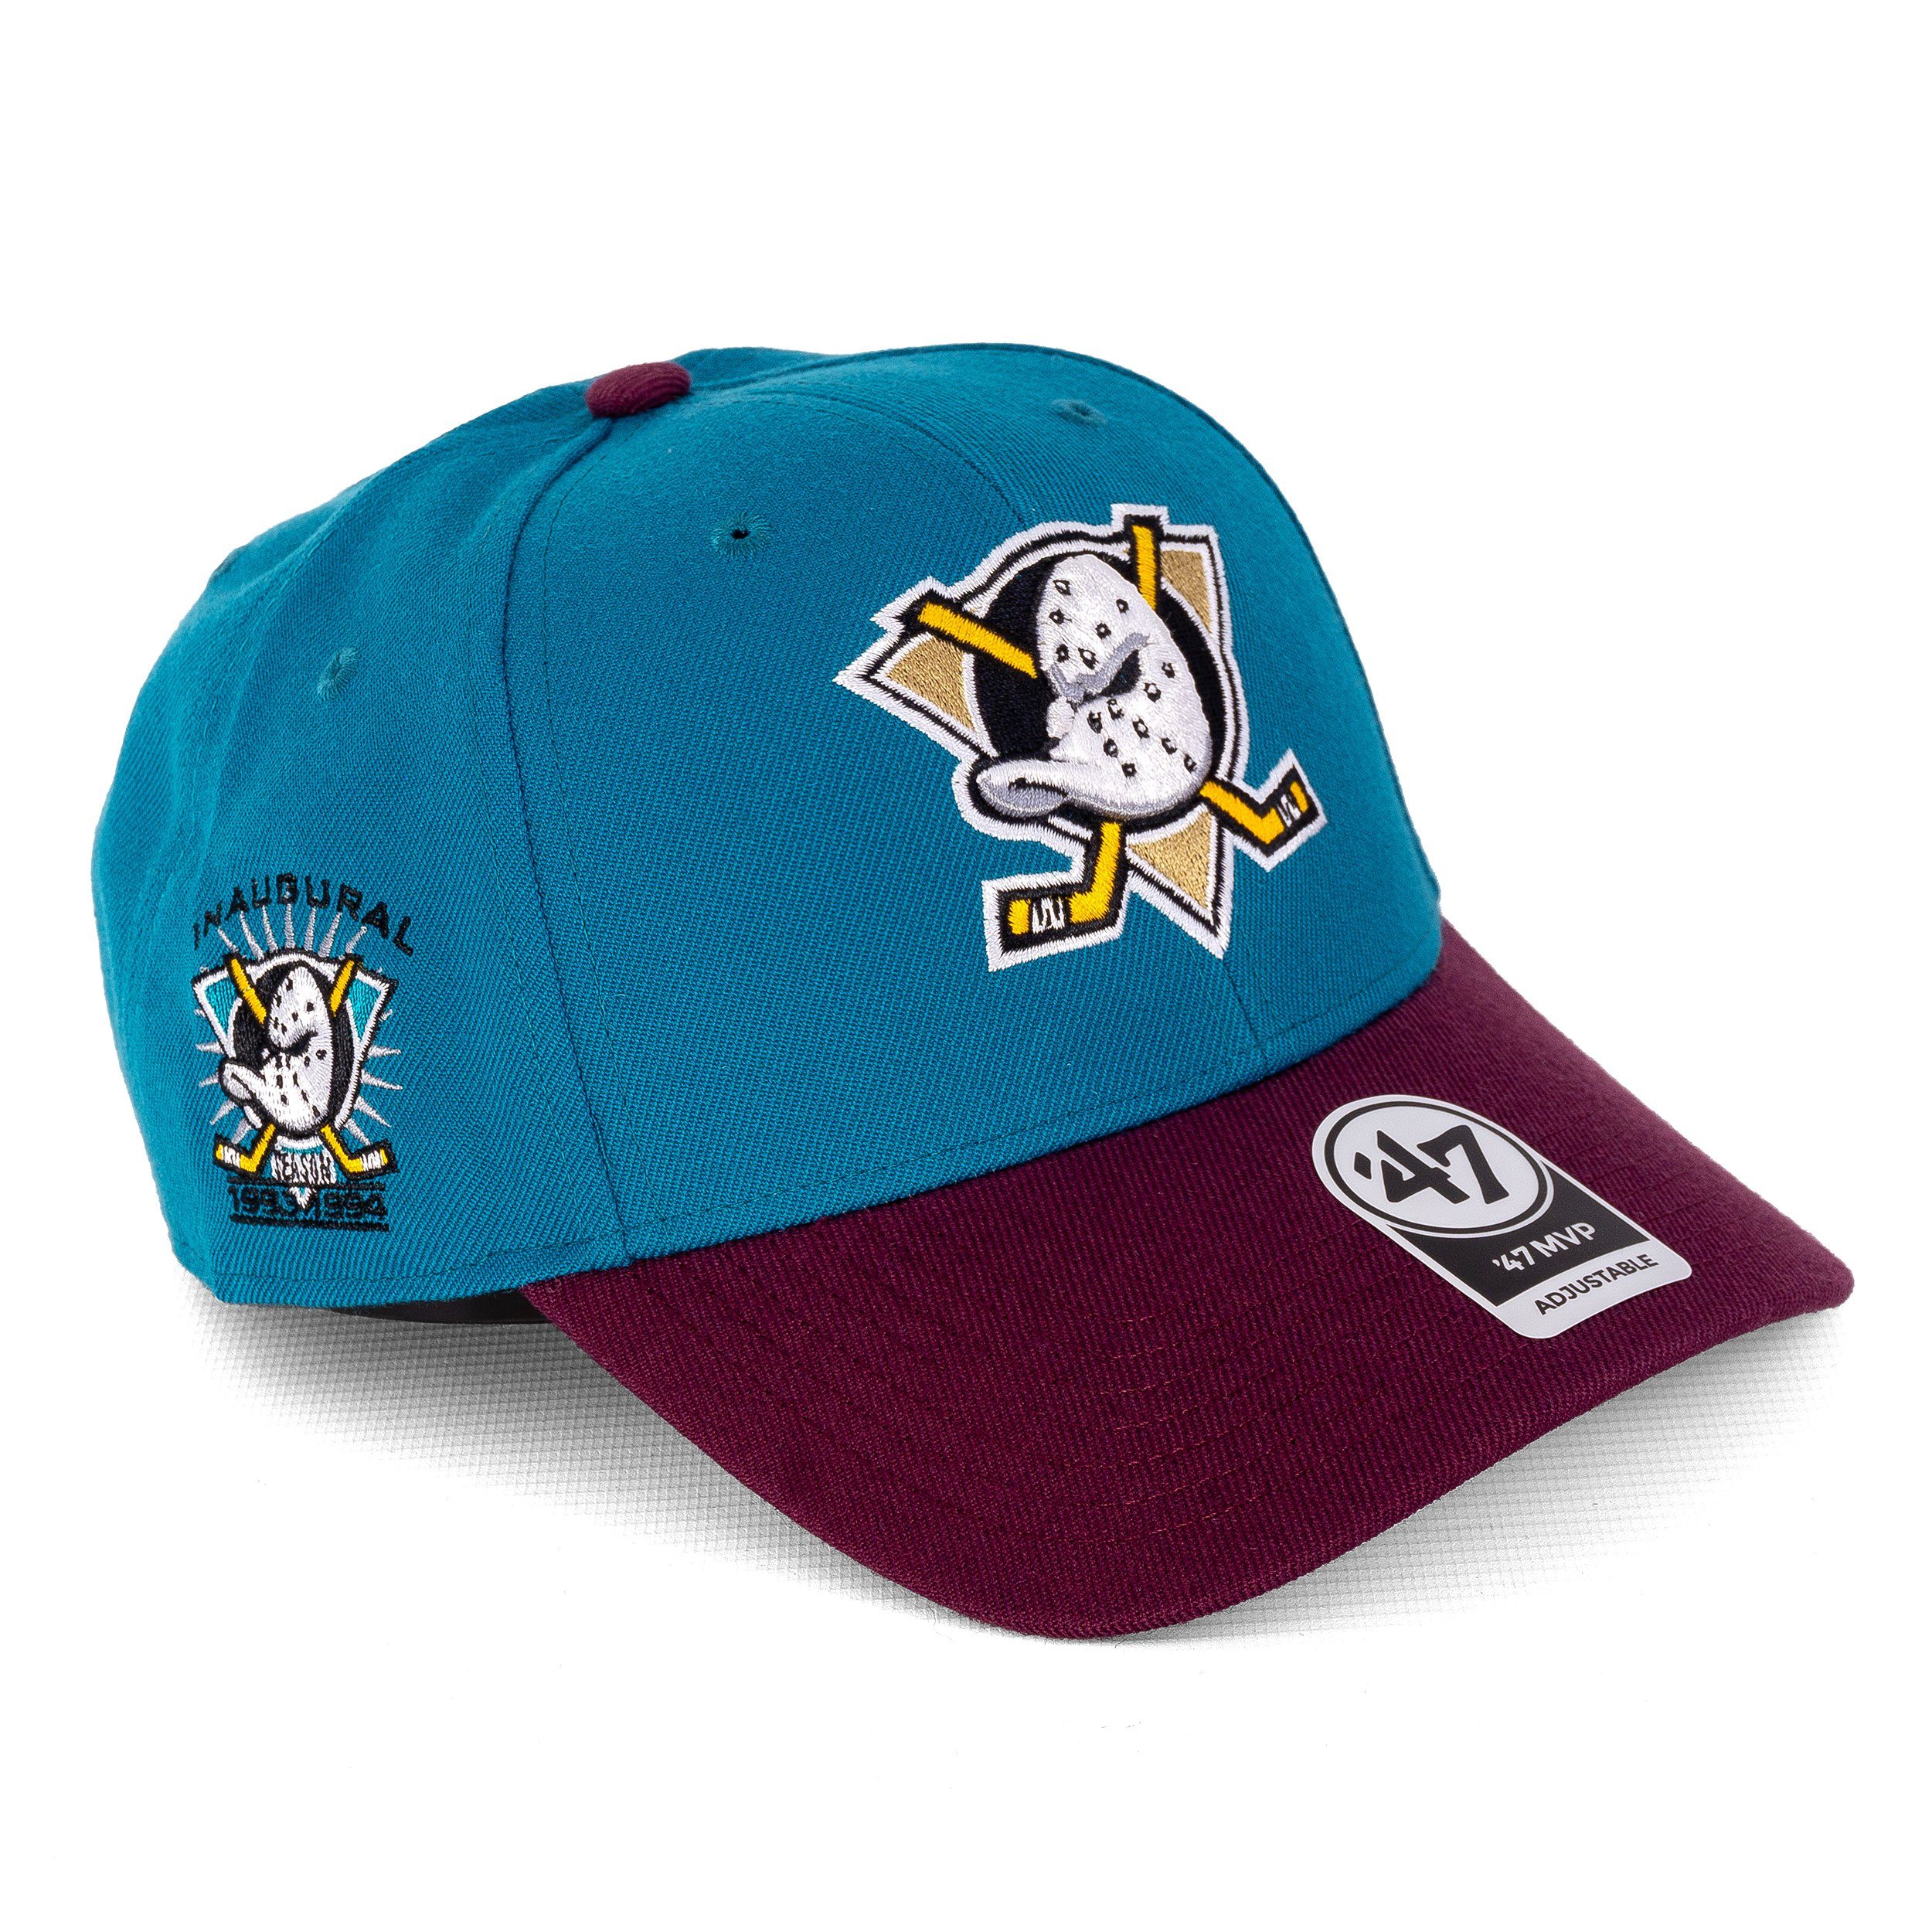 Anaheim Ducks Brand Brand Baseball Cap bordo Cap Snapback '47 '47 teal